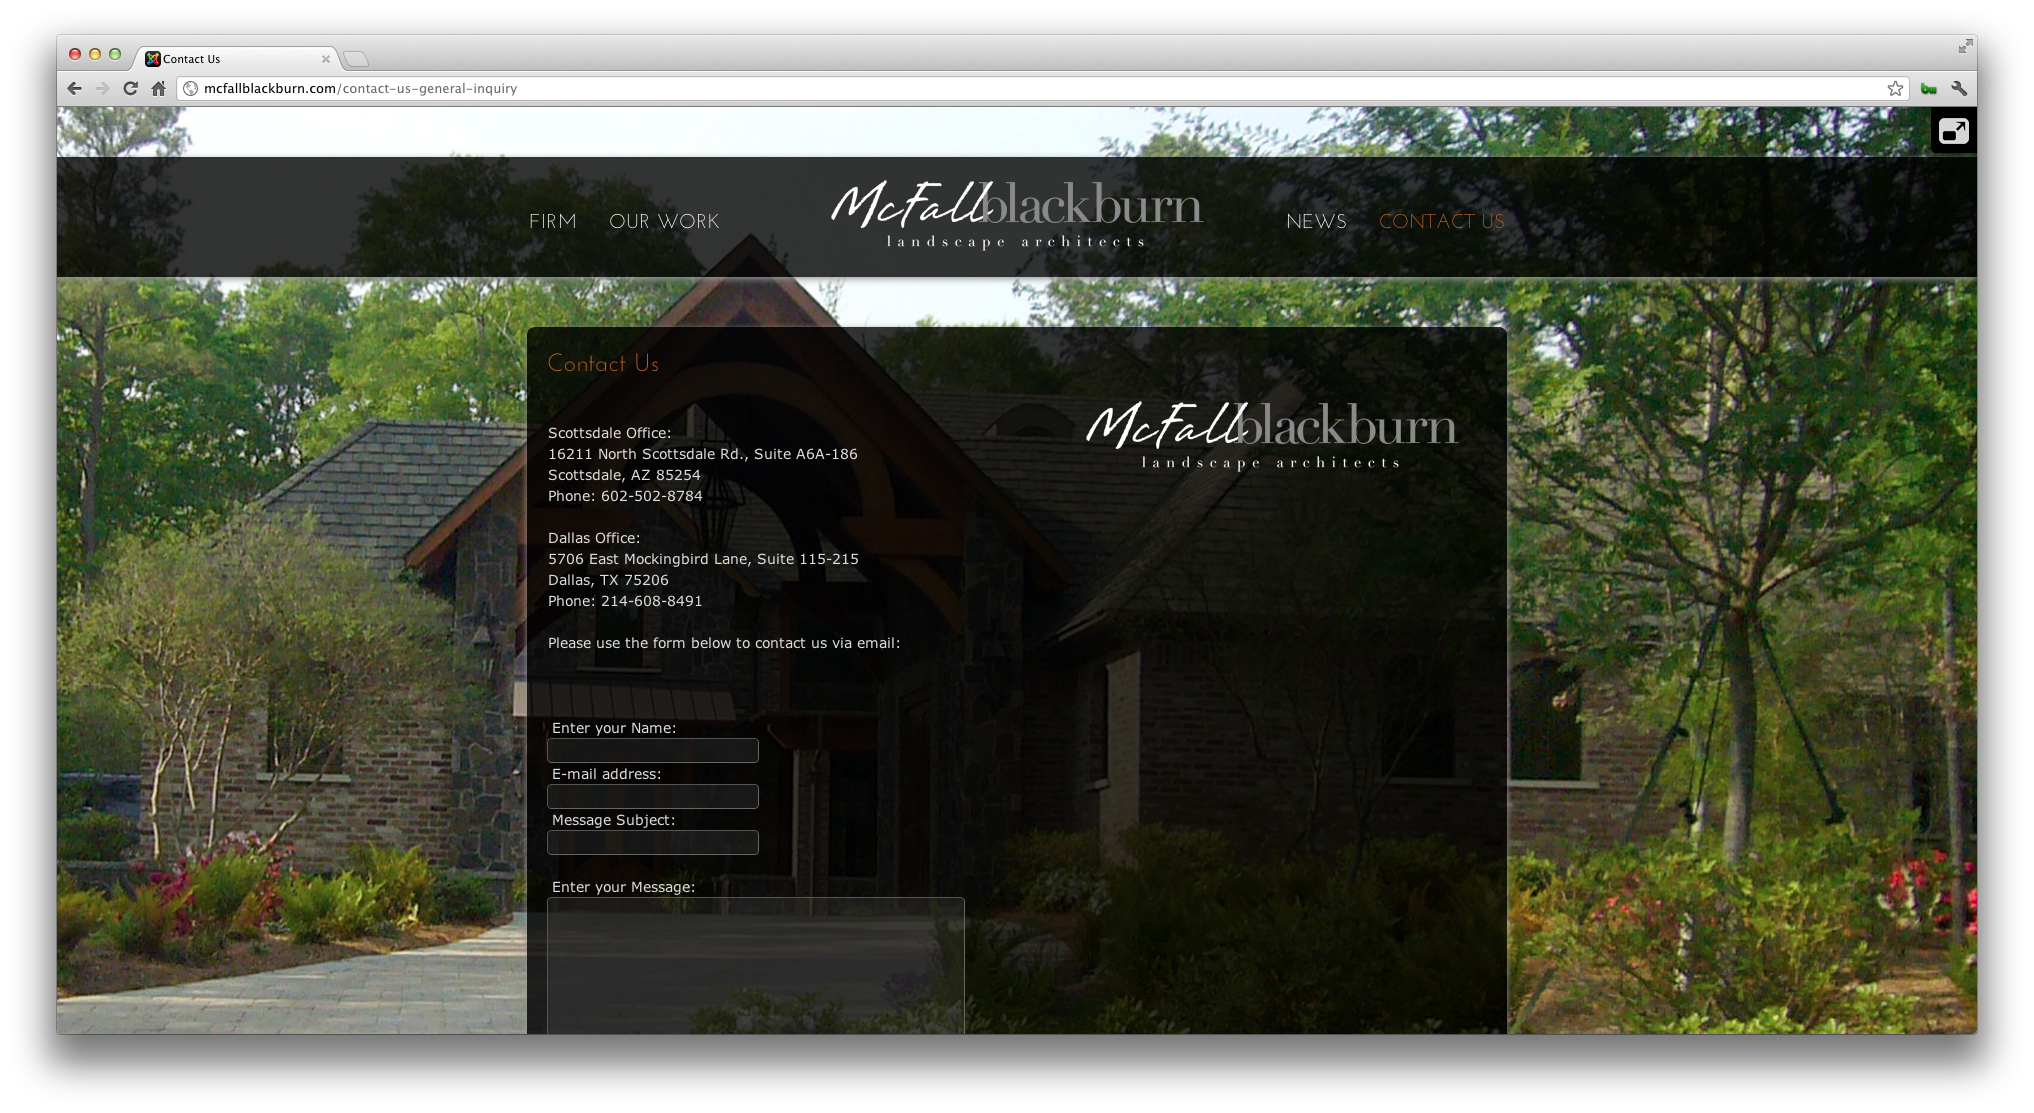 McFall Blackburn Website